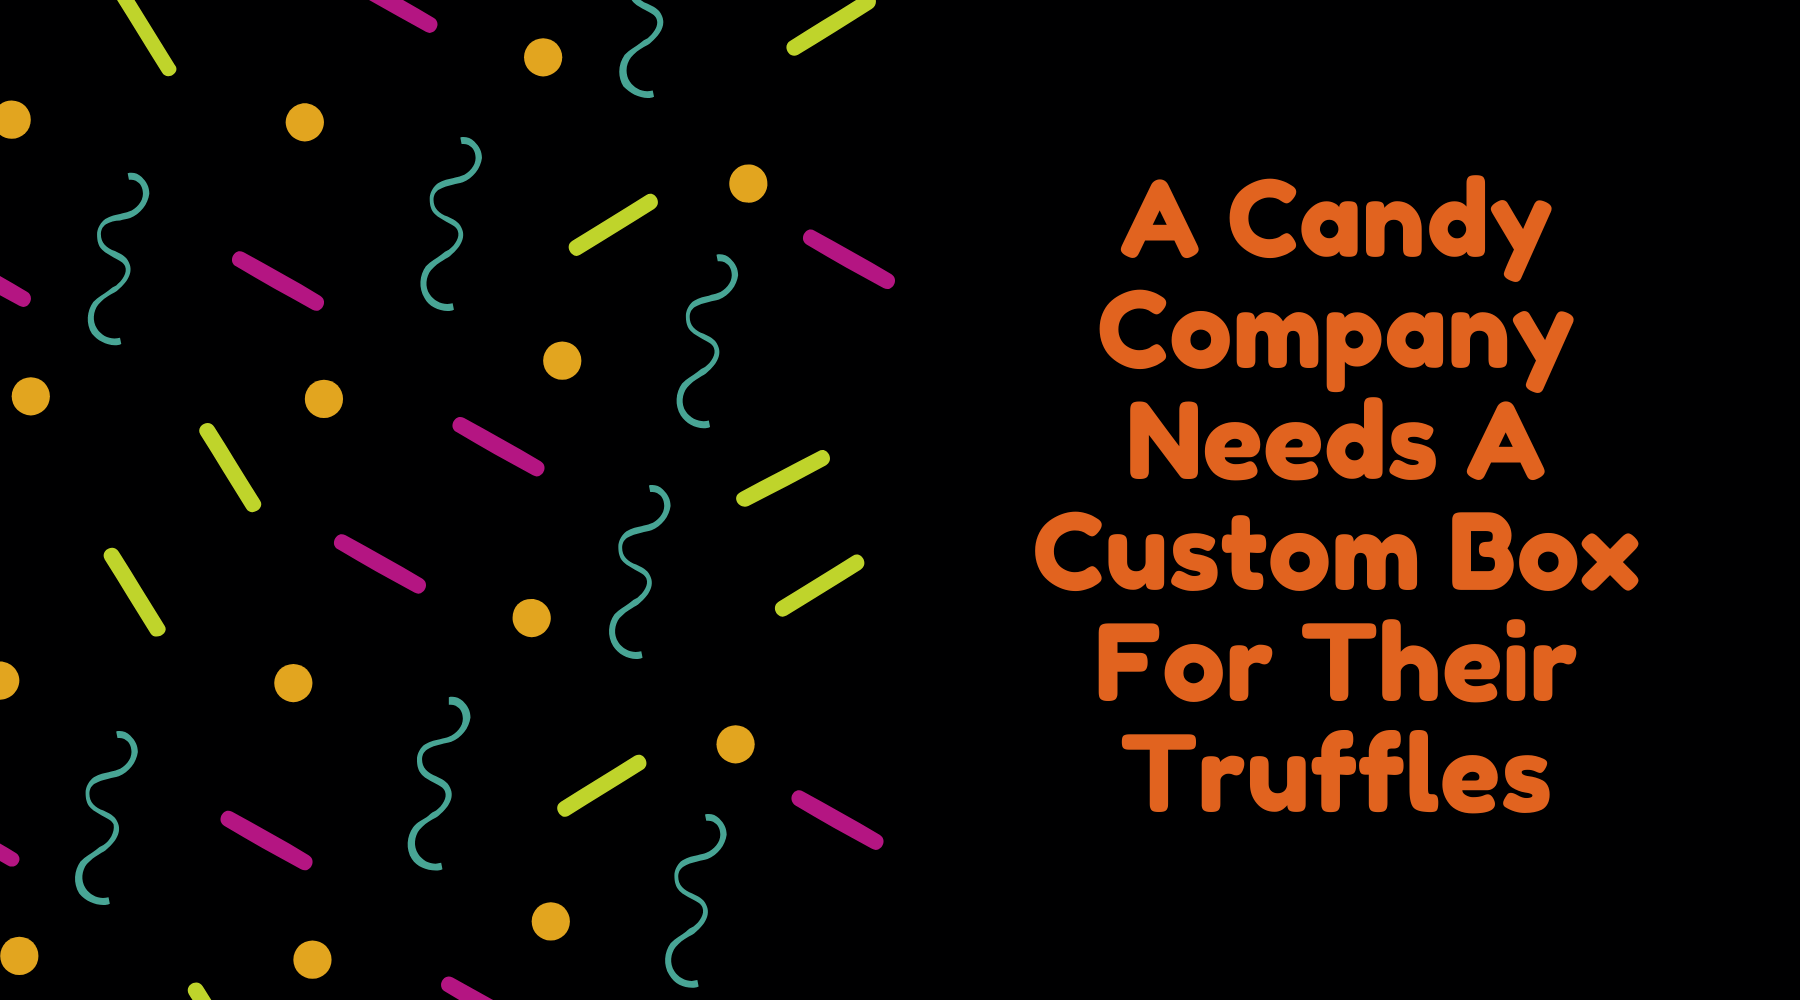 A Candy Company Needs A Custom Box For Their Truffles